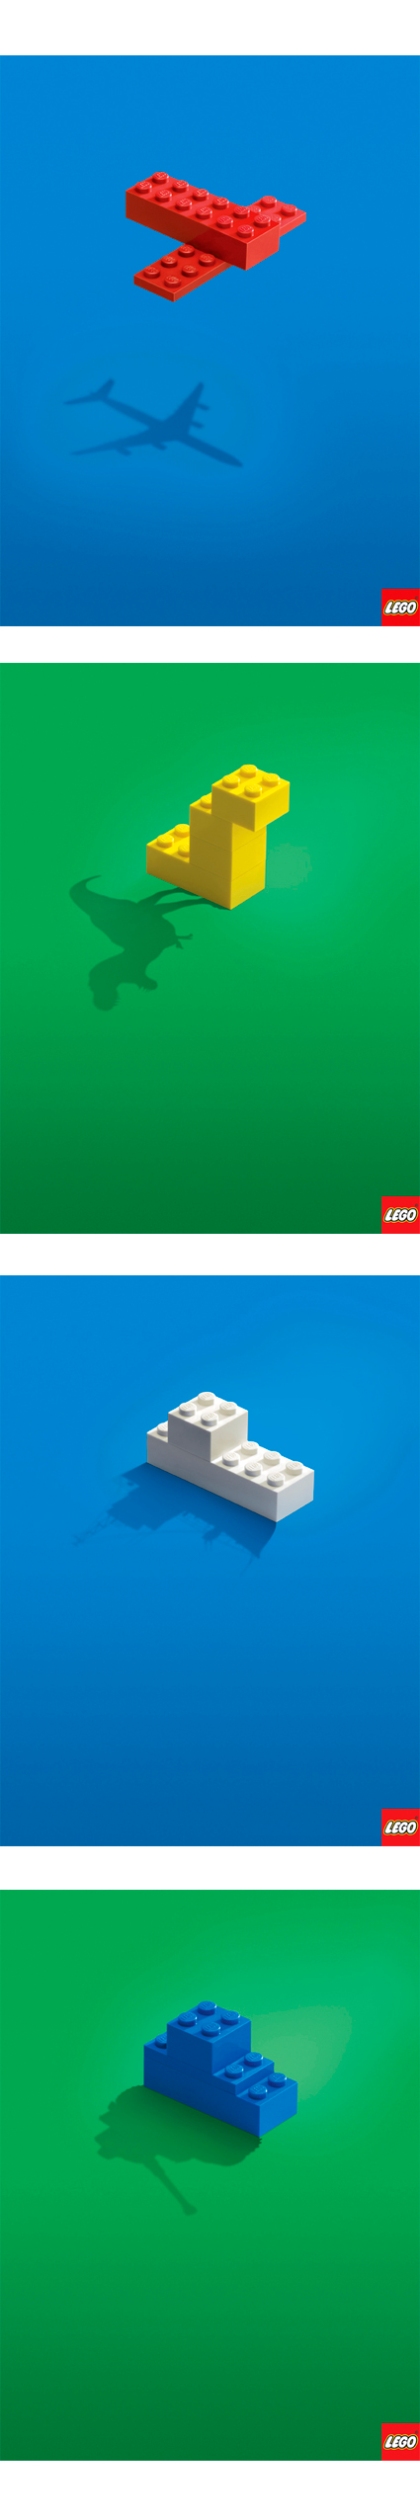 lego-adverts.jpg